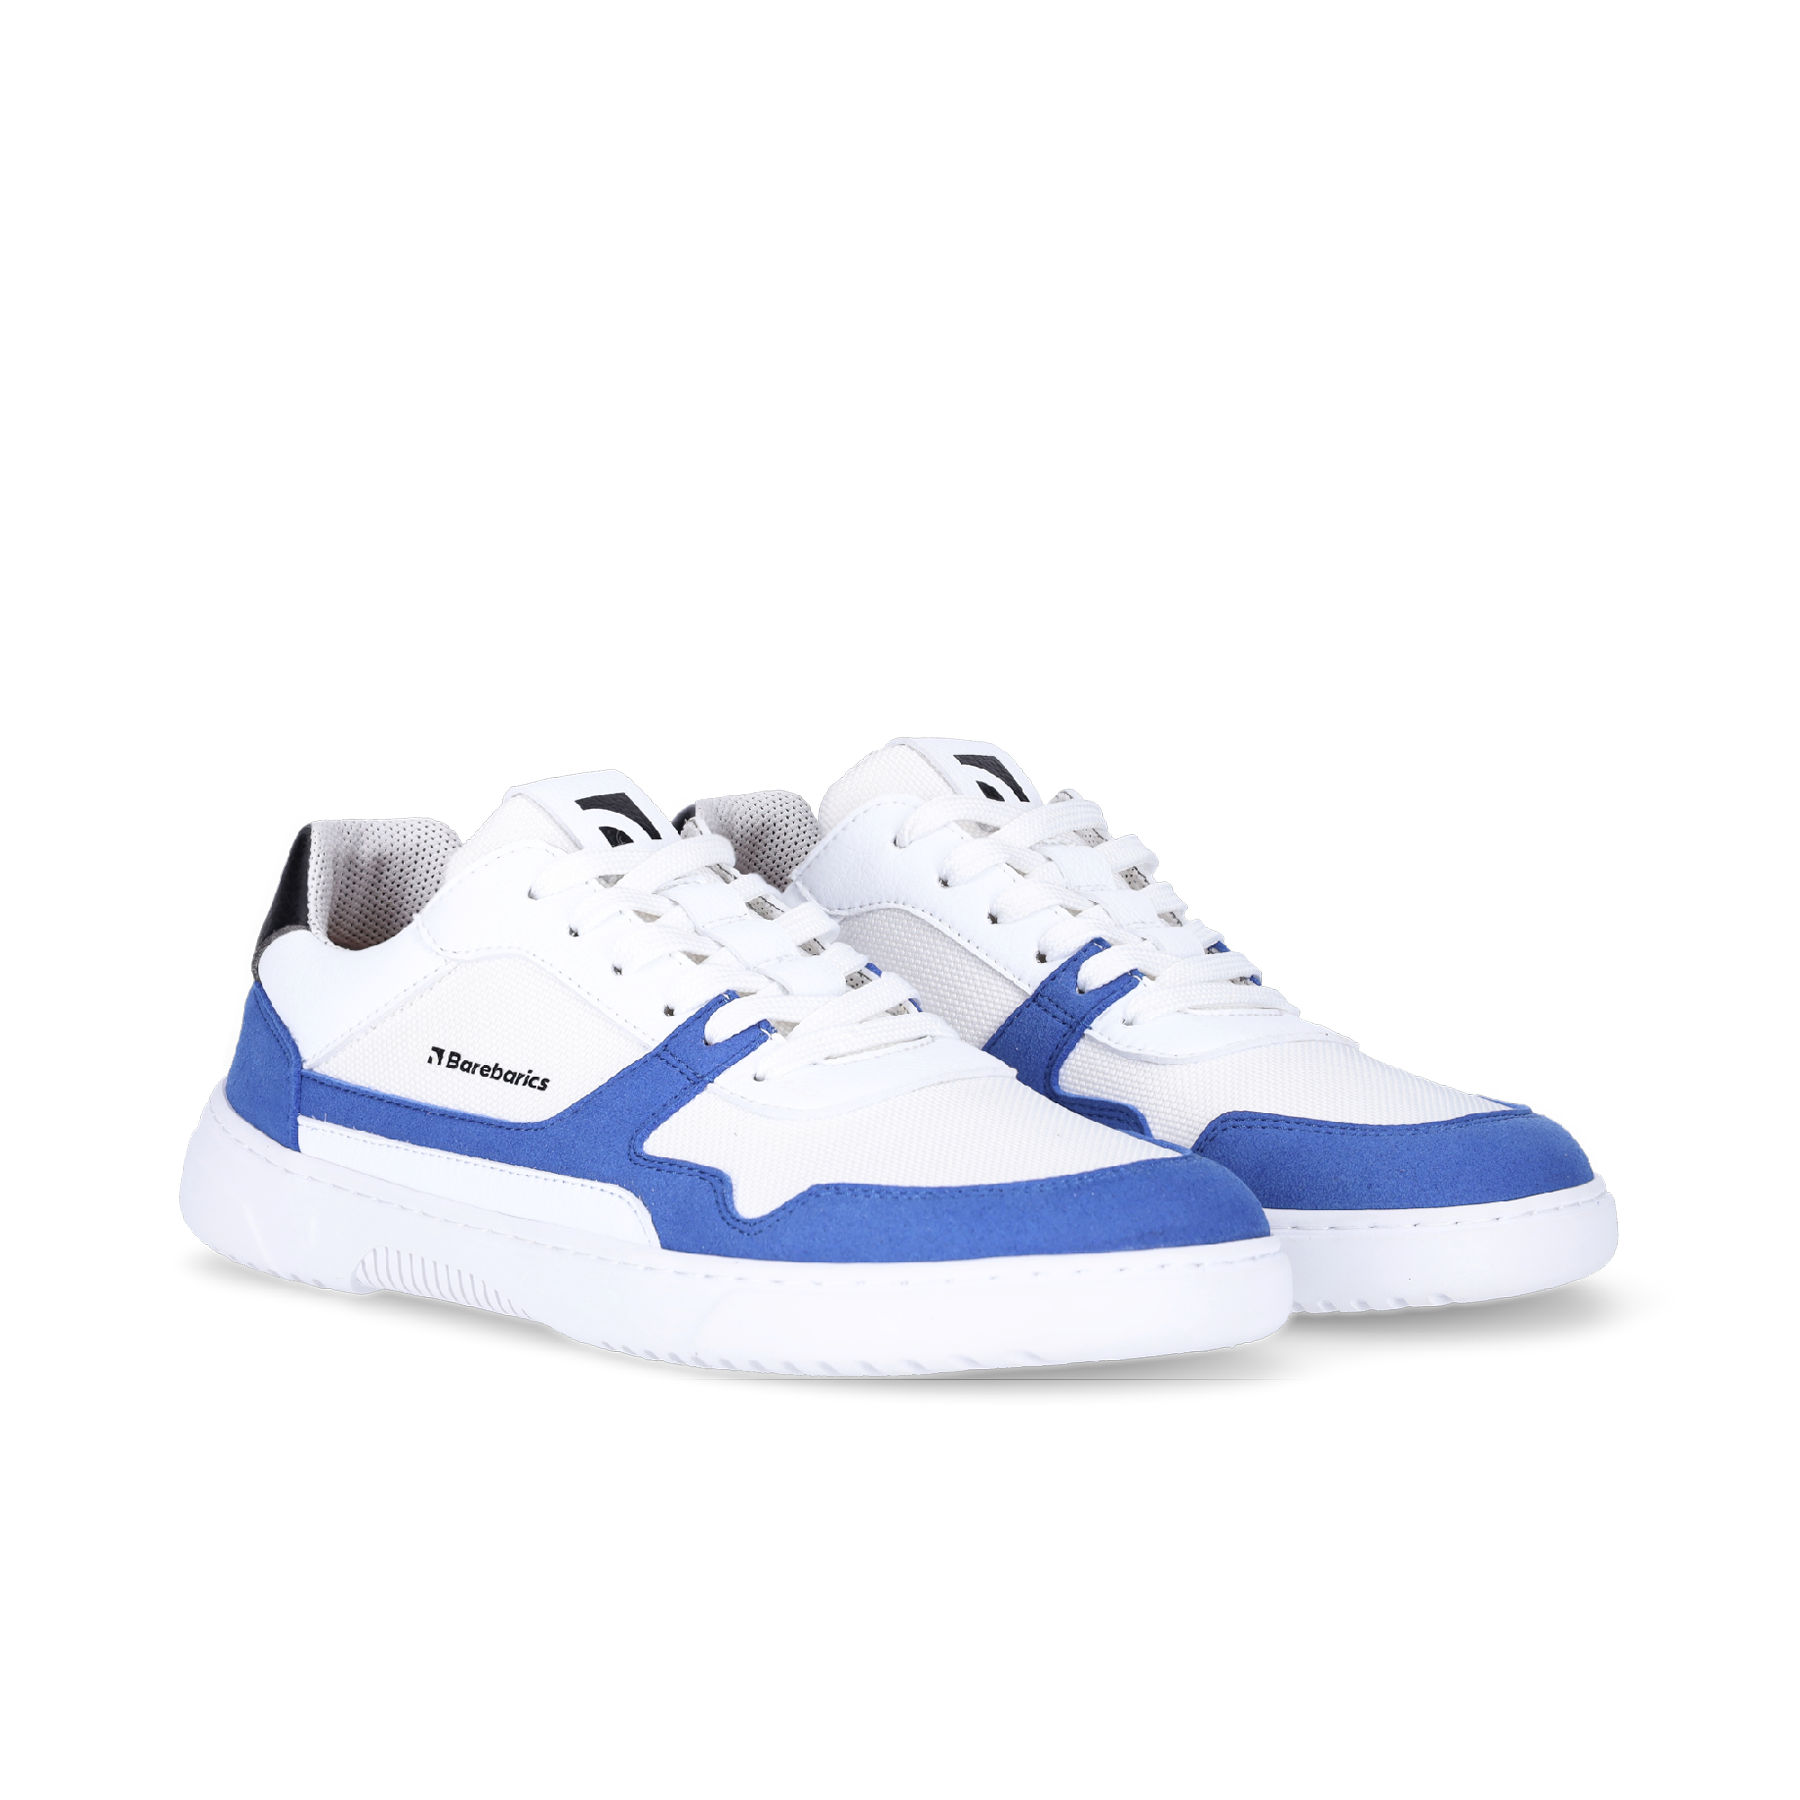 Barefoot Sneakers Barebarics - Zing - White & Blue 9 OzBarefoot Australia